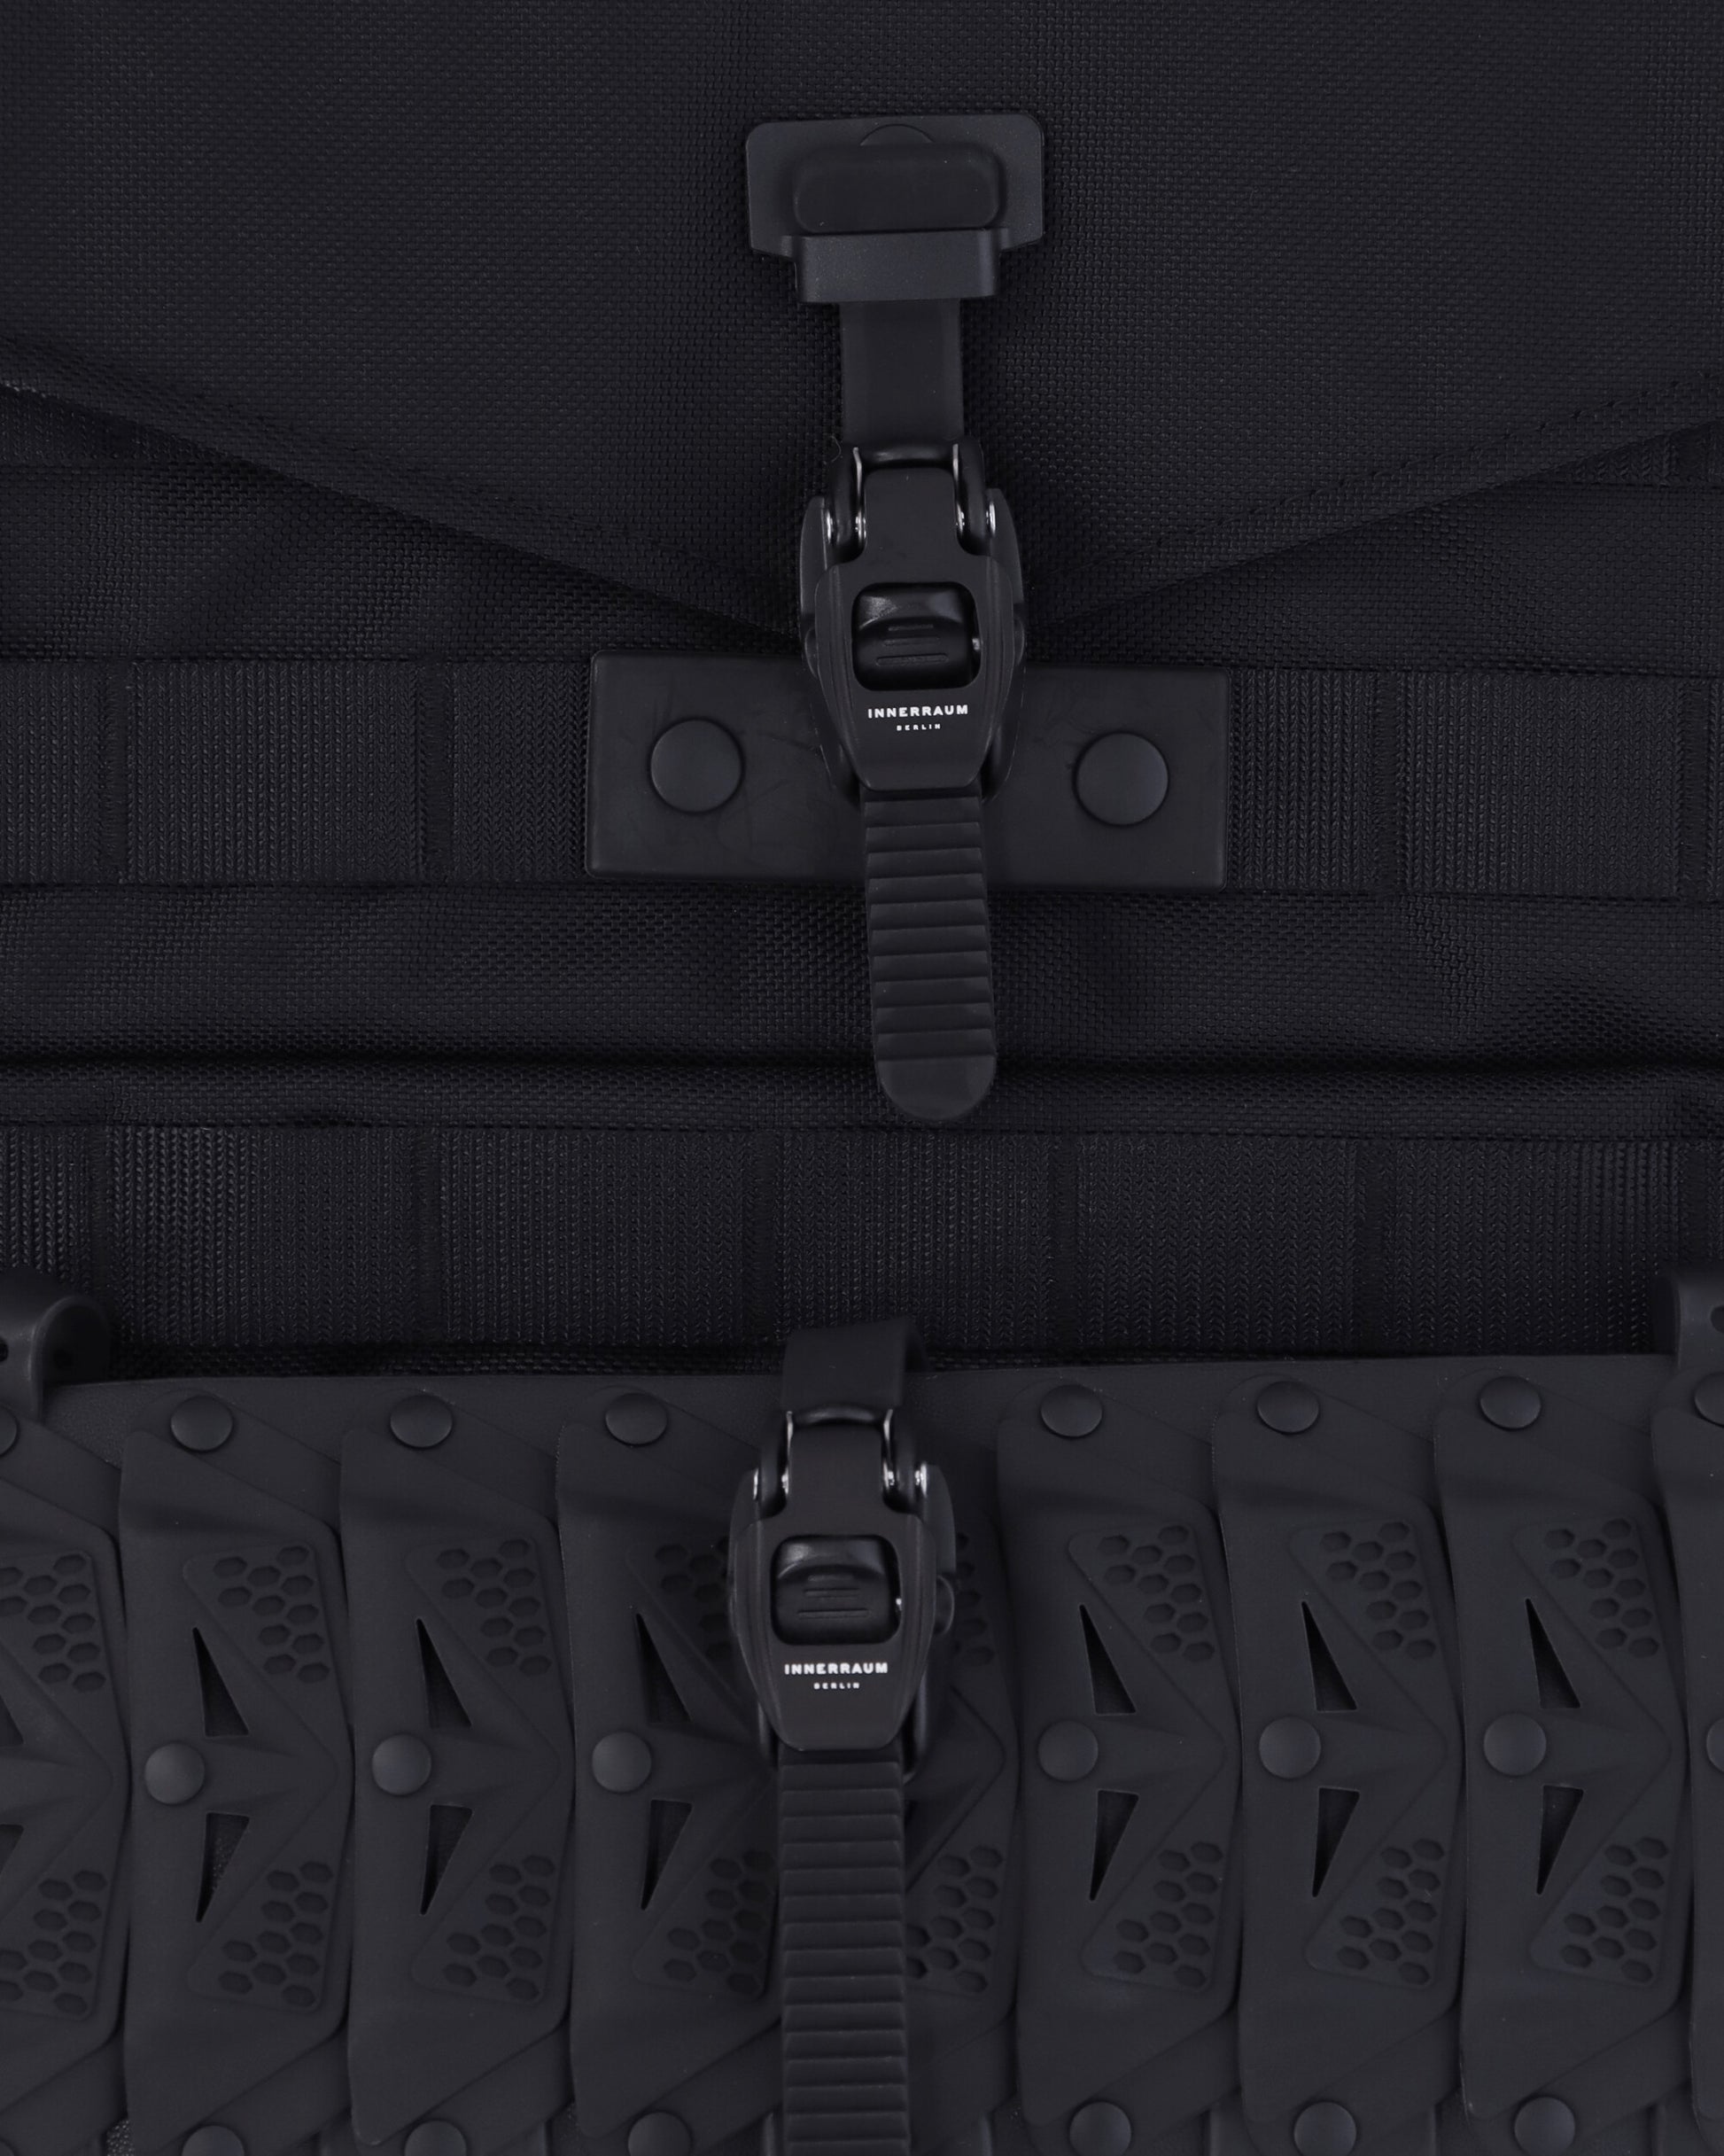 Junya Watanabe MAN Men'S Accessory Black Bags and Backpacks Backpacks WL-K201-W23 1